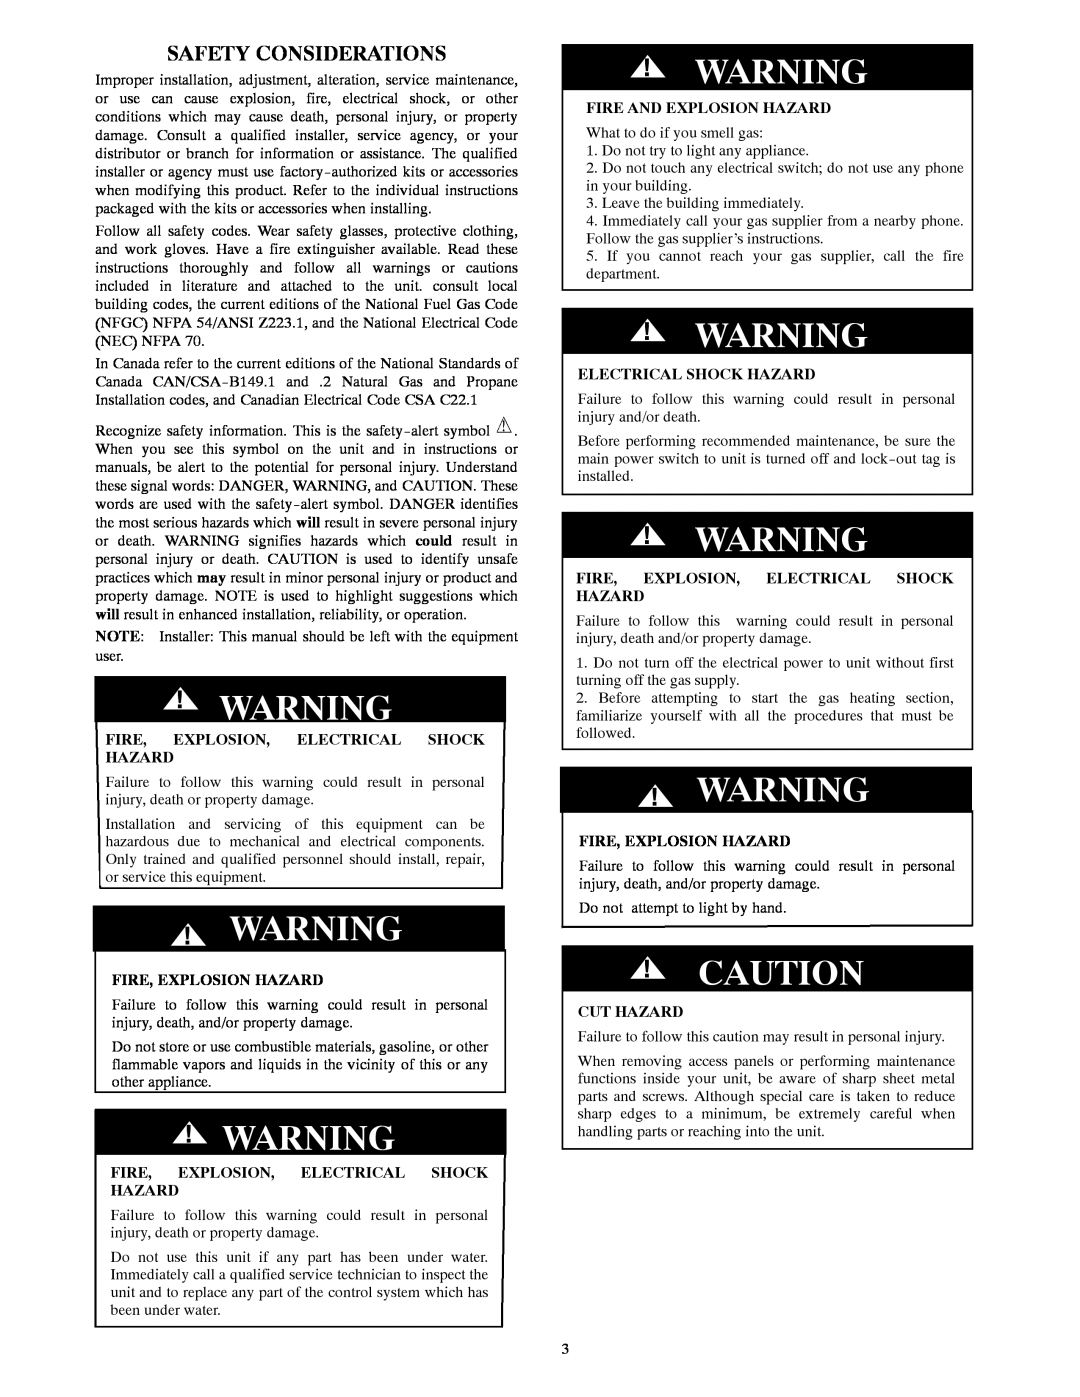 Bryant 574D, 577C manual Safety Considerations, Fire, Explosion, Electrical Shock Hazard, Fire, Explosion Hazard, Cut Hazard 